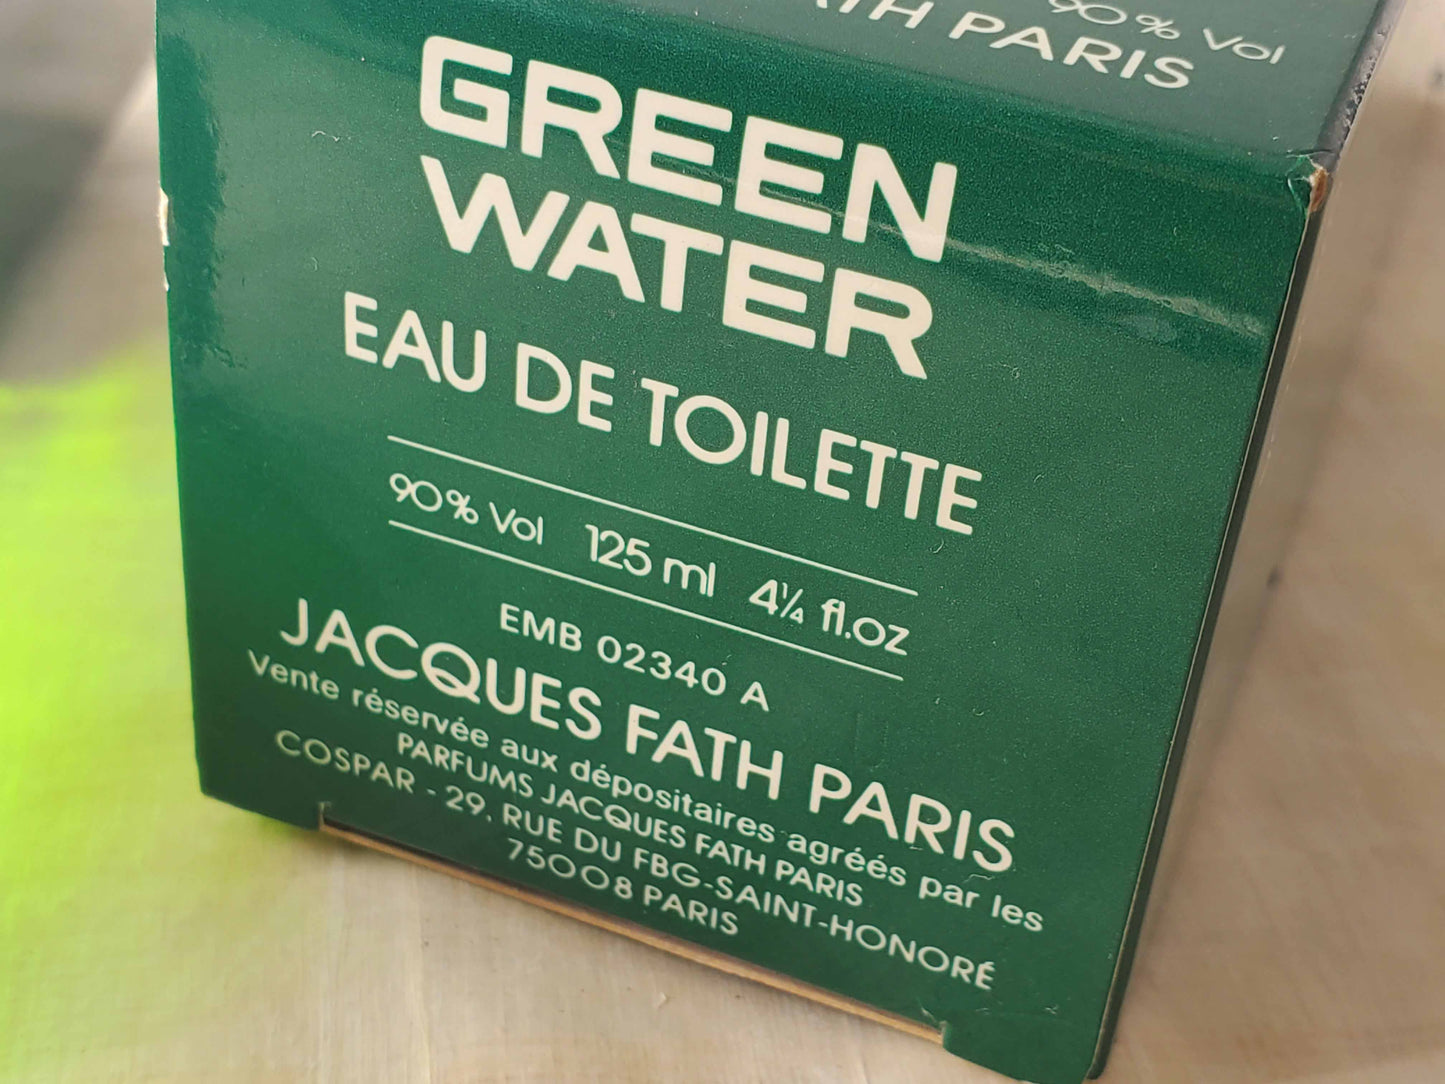 Green Water Jacques Fath for men EDT Splash 125 ml 4.2 oz, Vintage, Rare